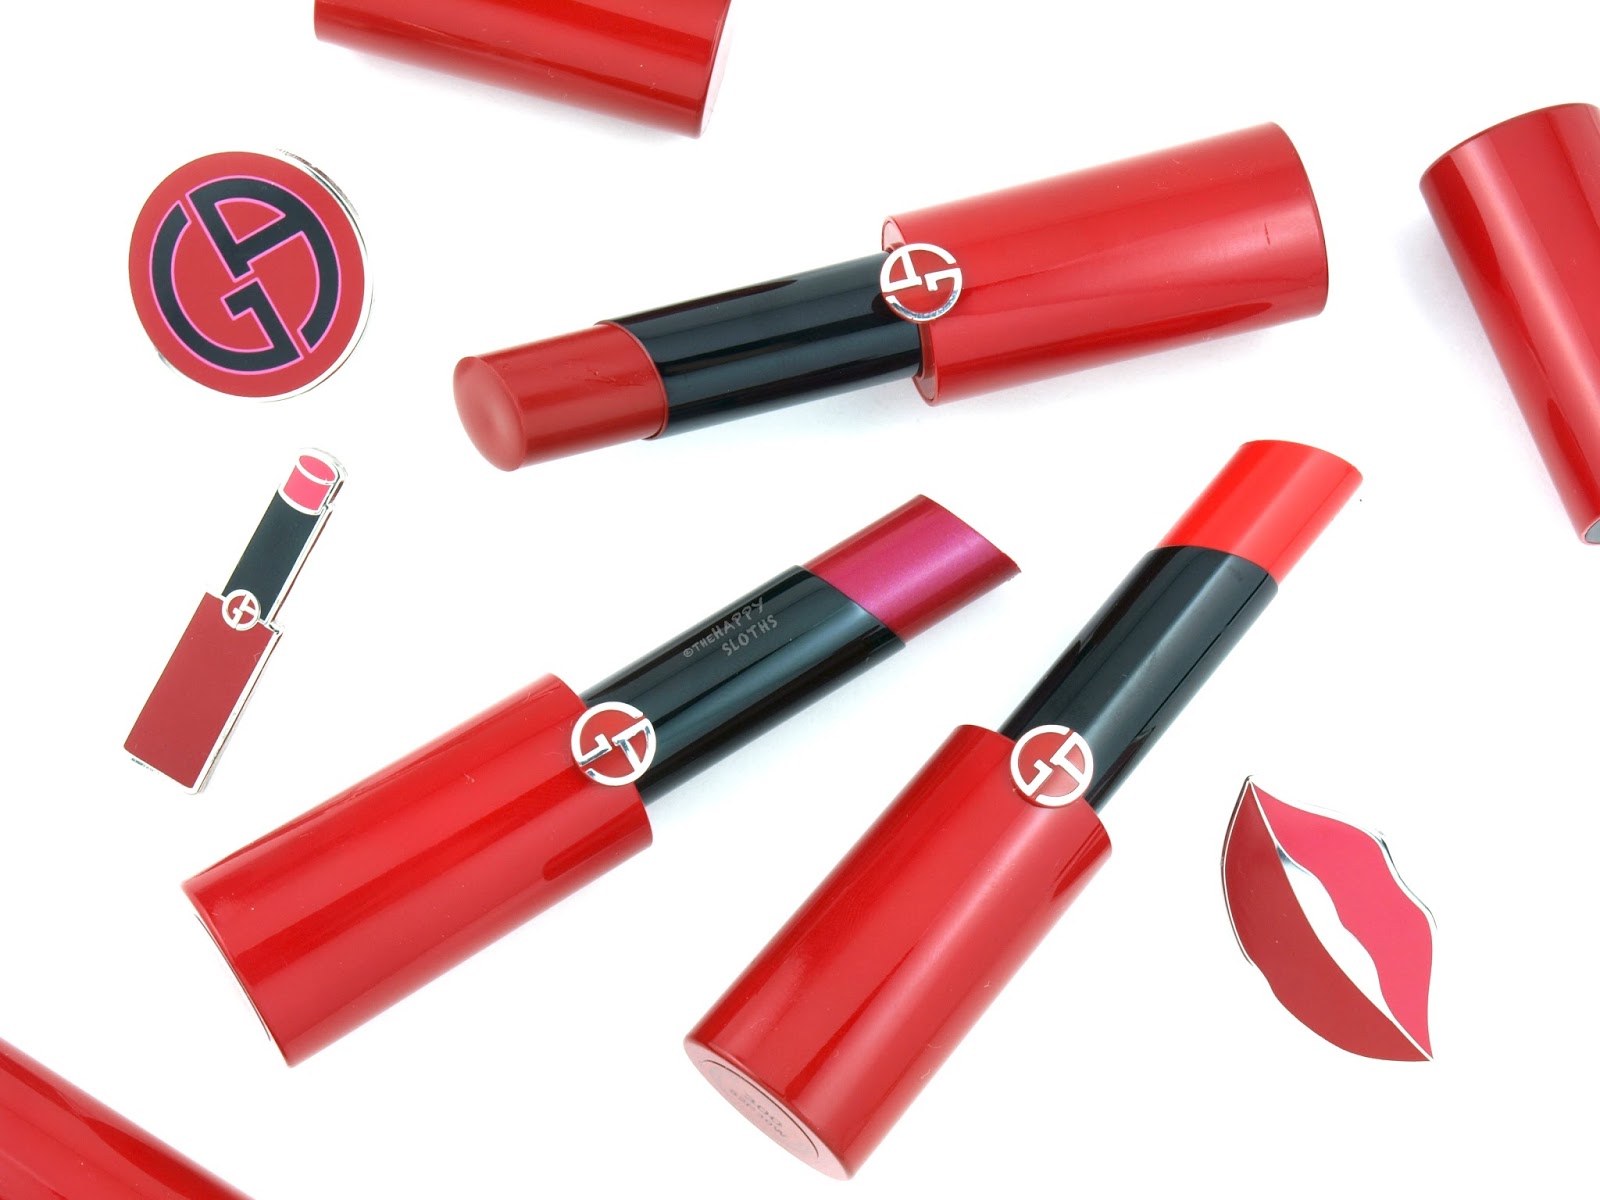 Giorgio Armani Beauty Ecstasy Shine Lipsticks: Review and Swatches